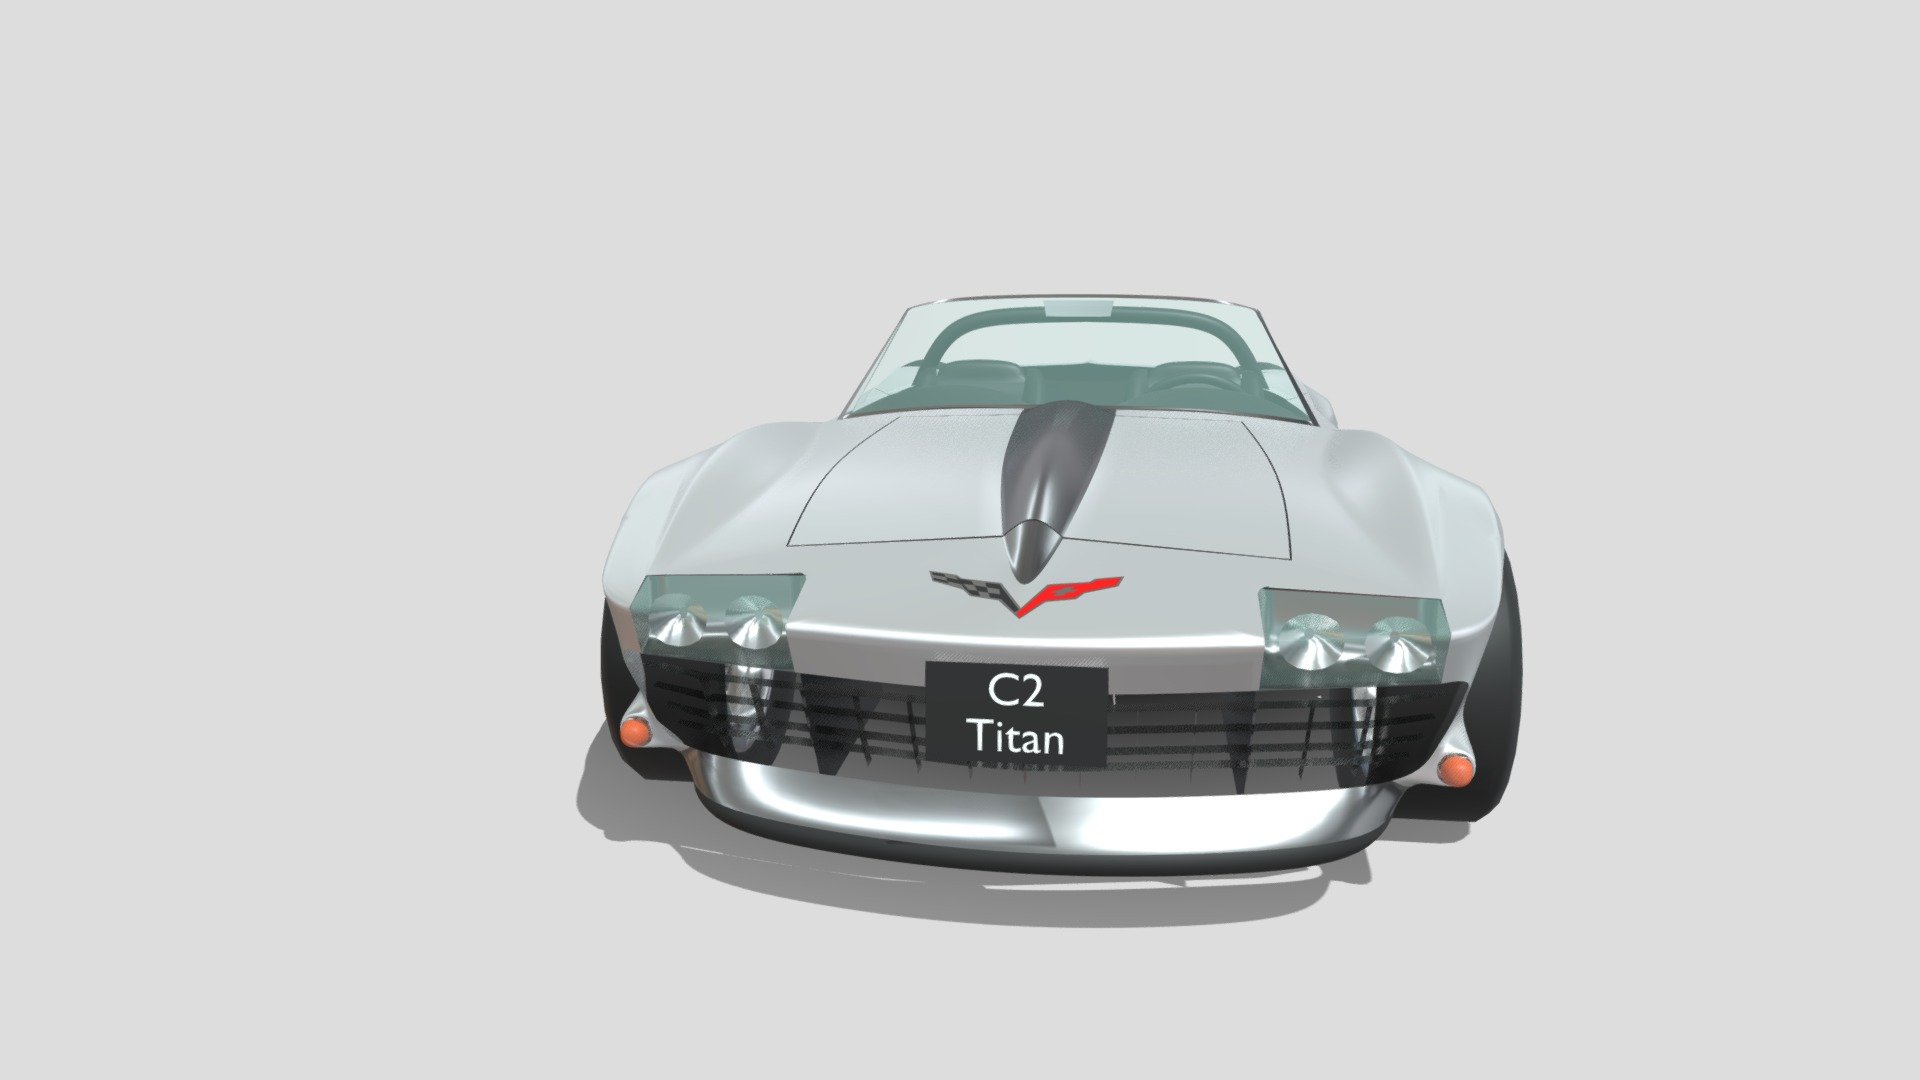 Carrozze DÄULARI : some &lsquo;grand sport' features, widebody, sidepipe, diffusor - Chevrolet Corvette C2 Titanium - Download Free 3D model by Carrozze DÄULARI (@alhertenberger) 3d model